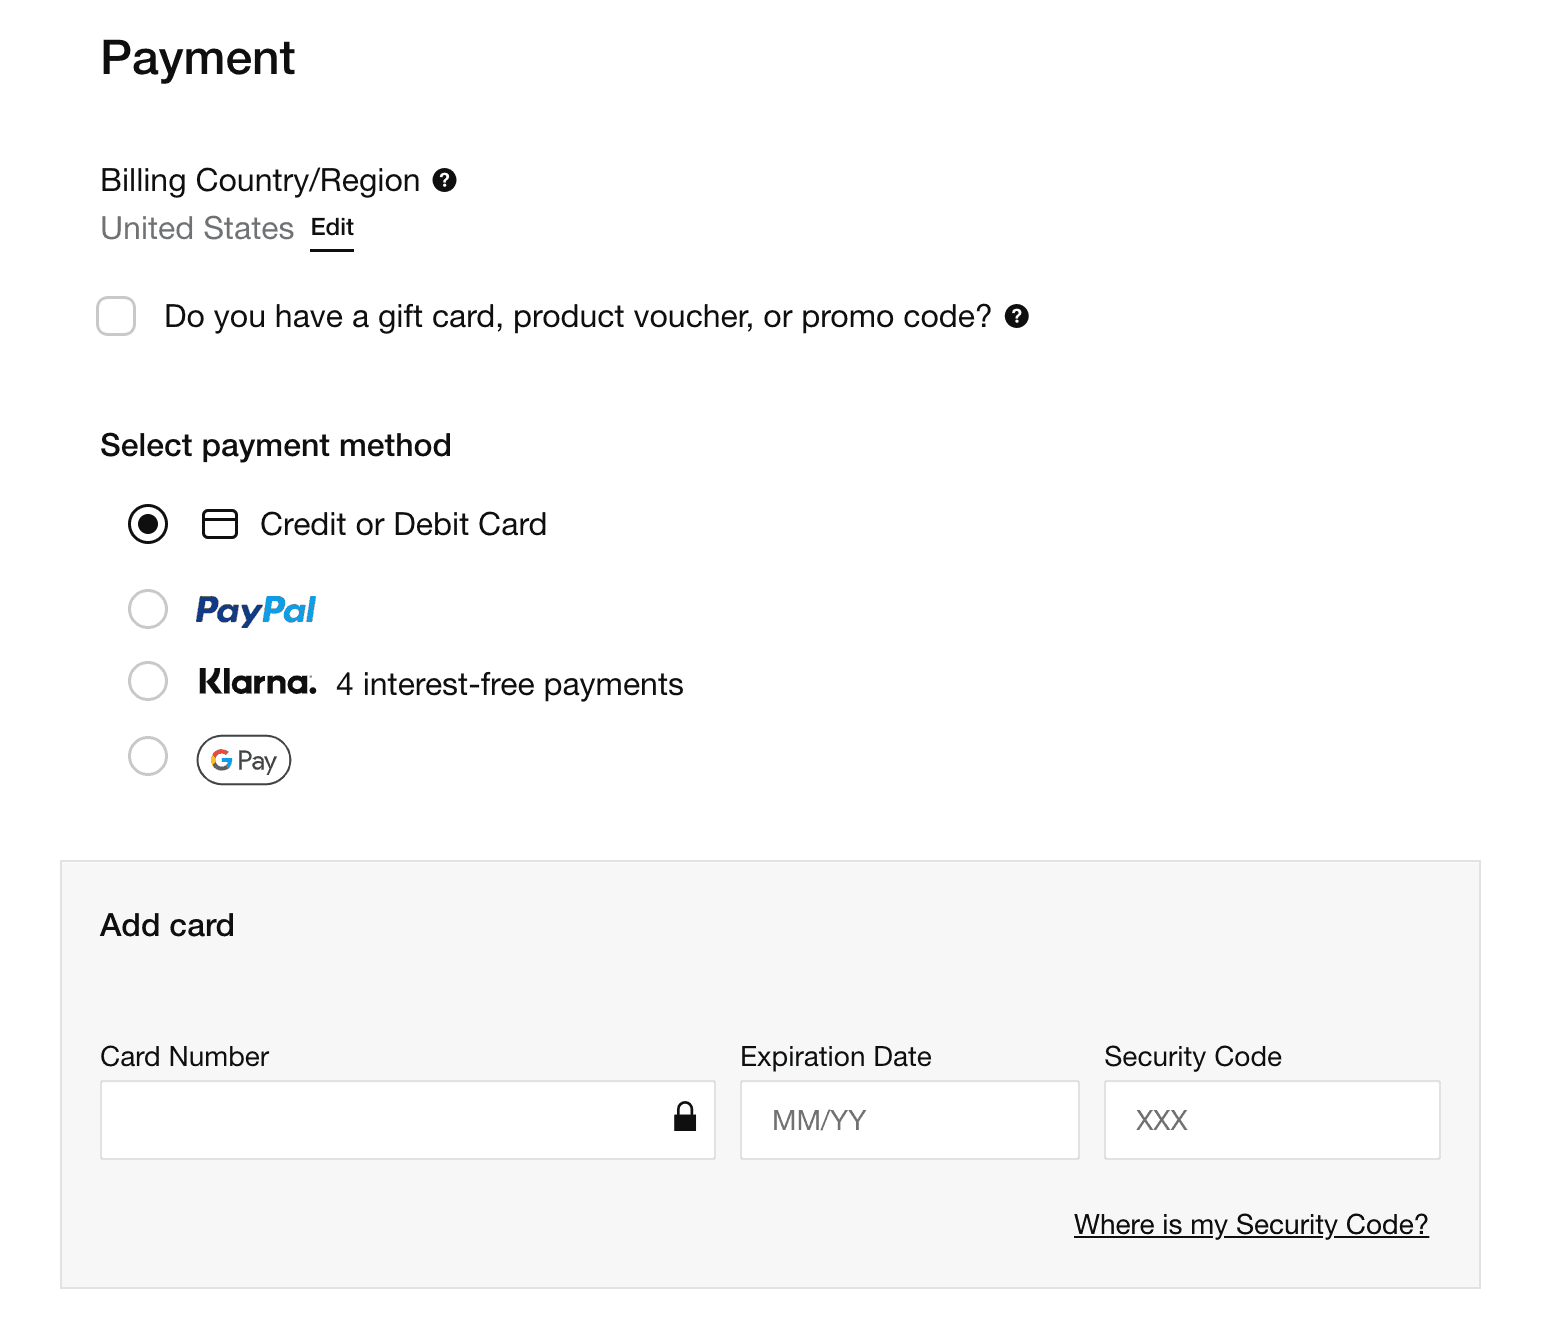 Nike payment method - Credit or Debit Card, PayPal, Klarna, Google Pay